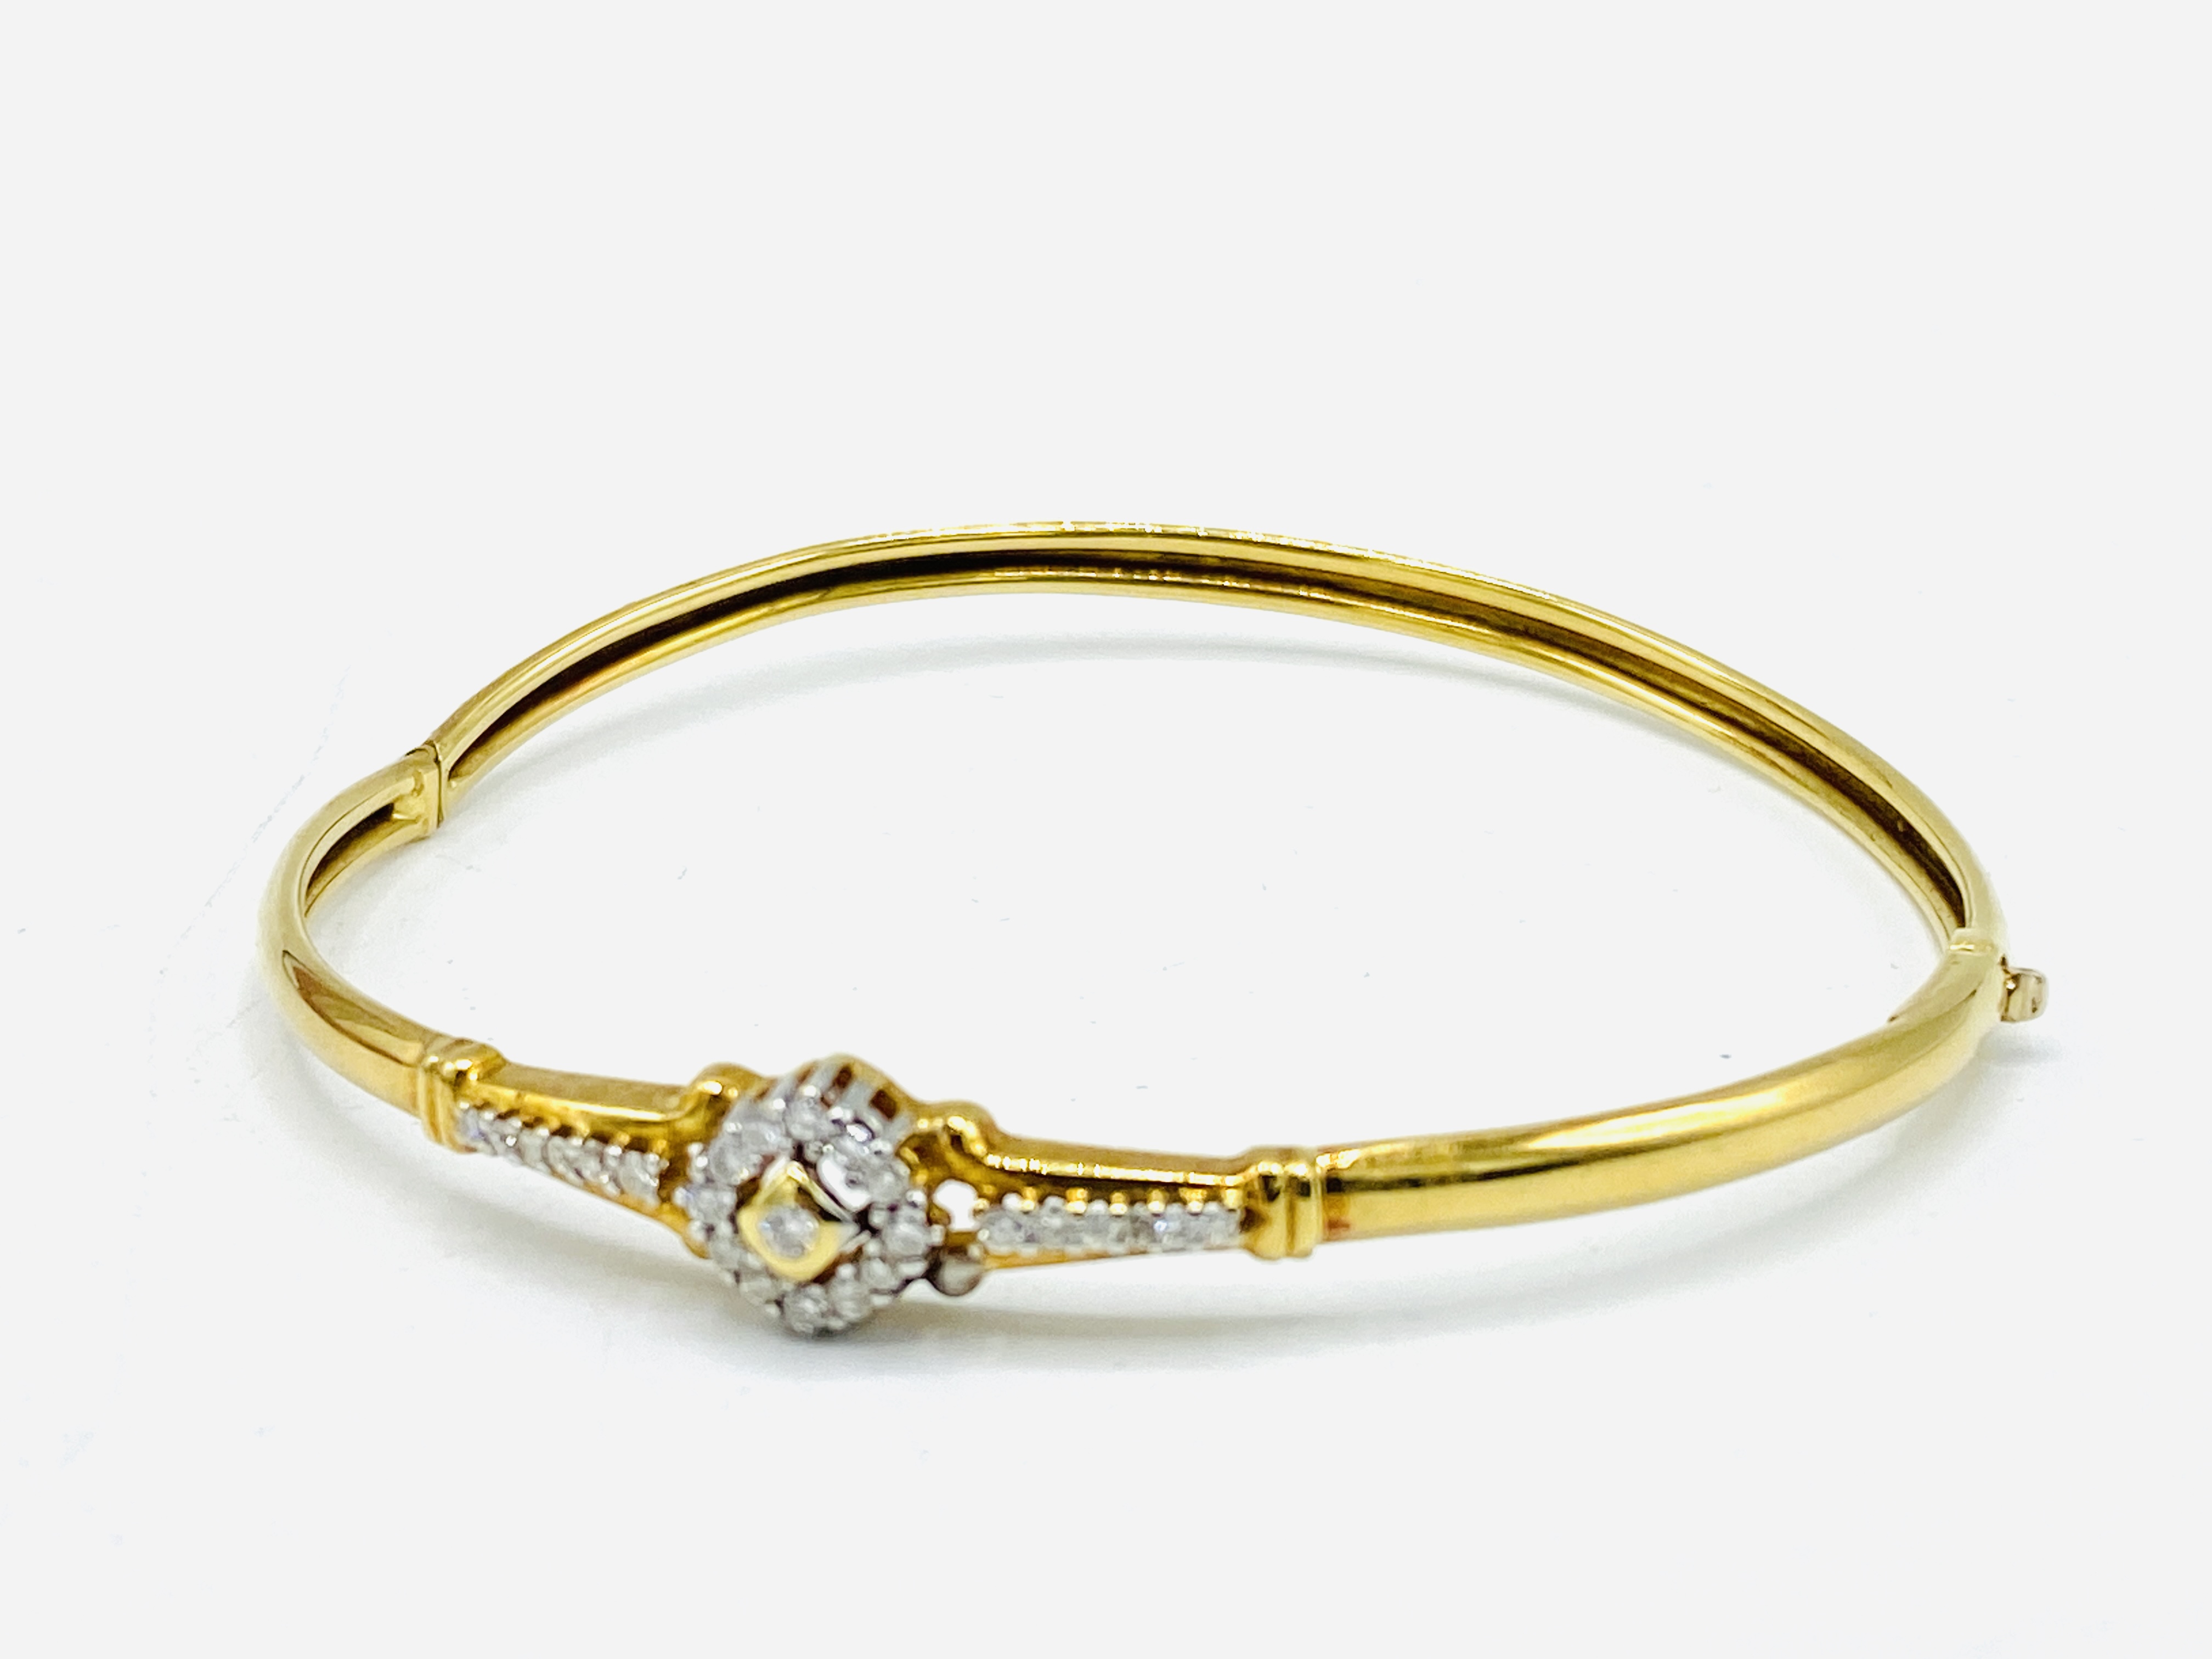 18ct gold and diamond bracelet